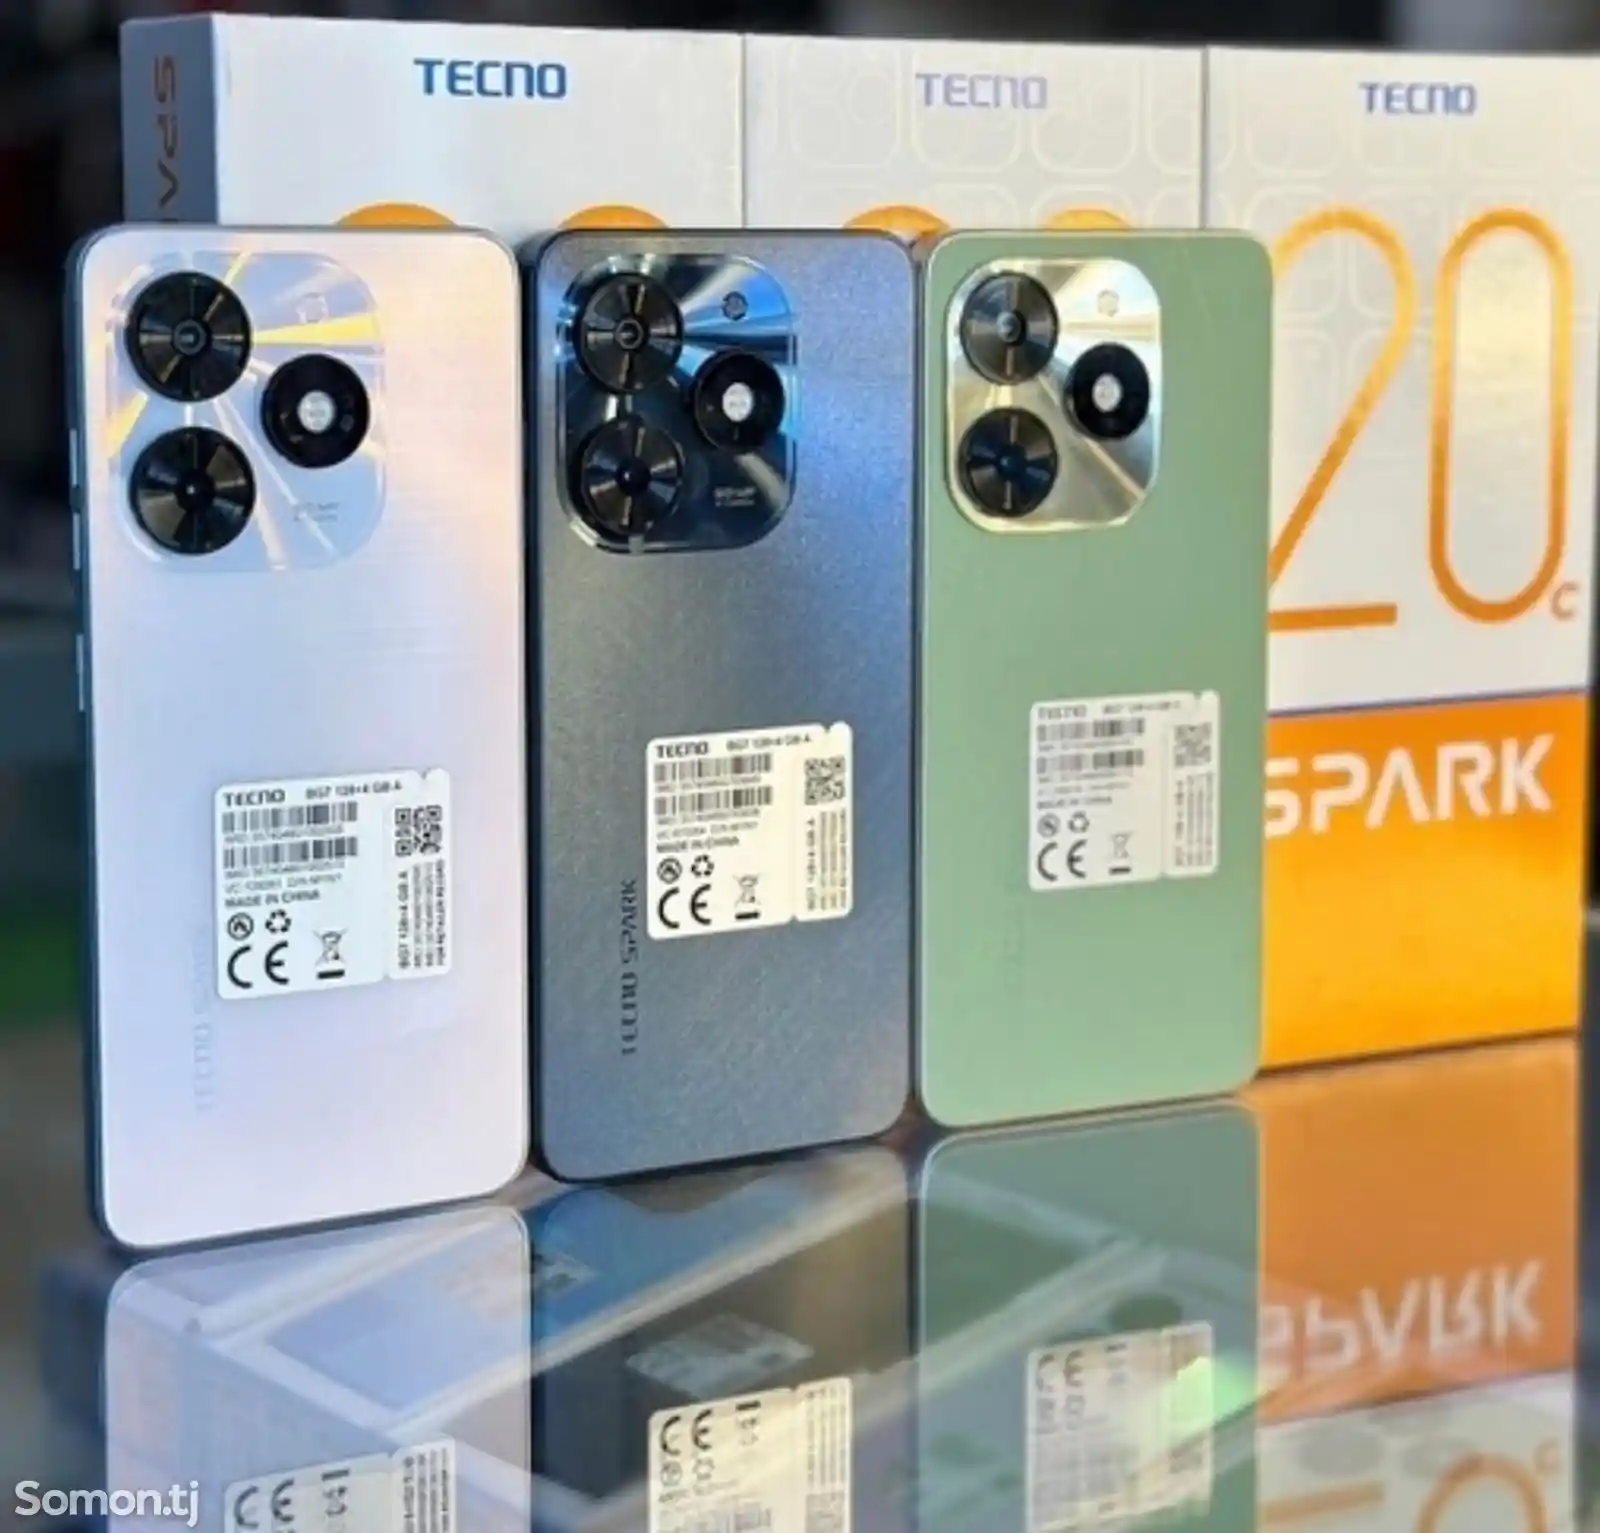 Tecno Spark 20c-2